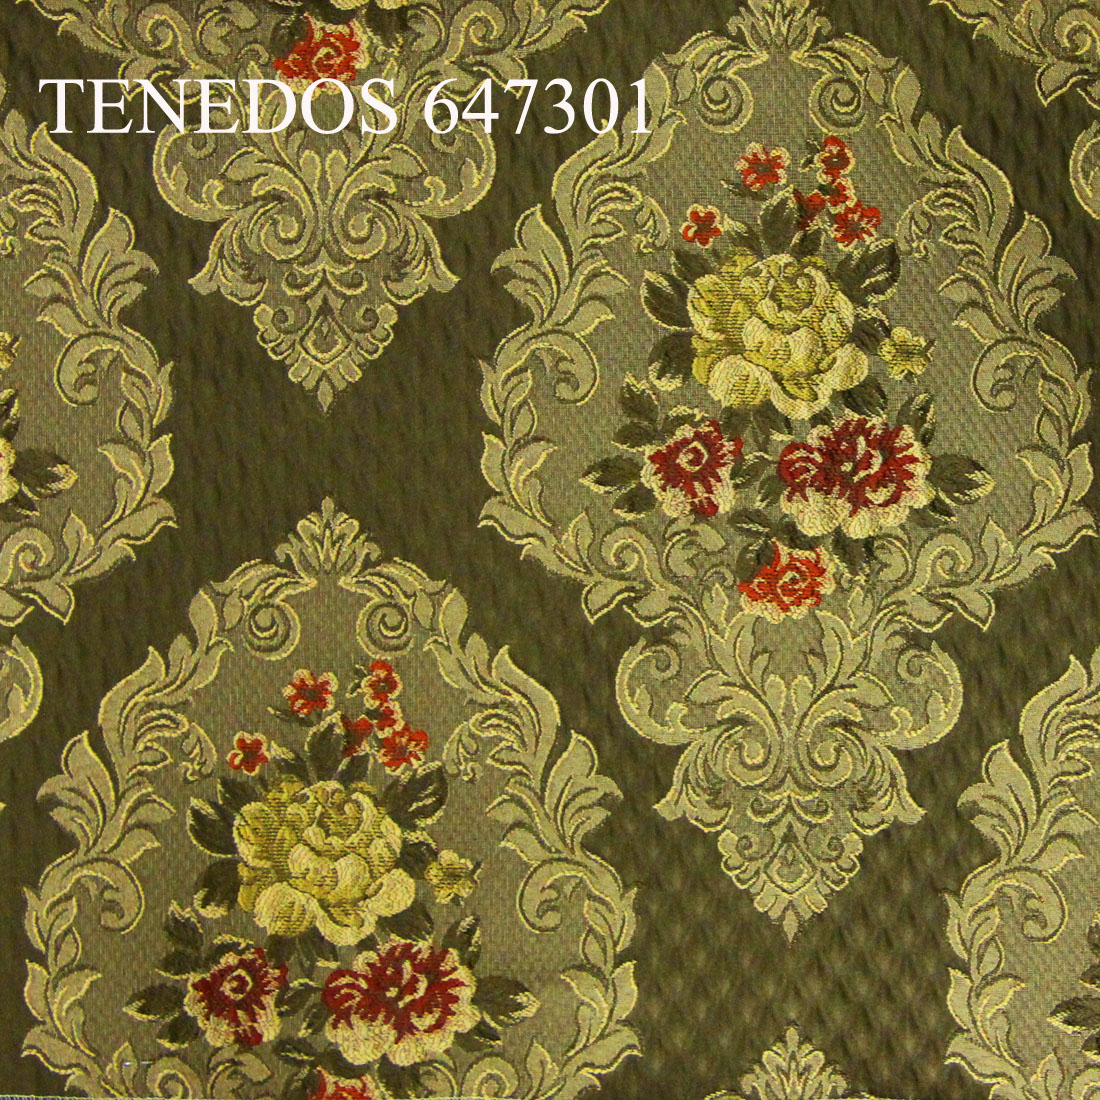 TENEDOS 647301